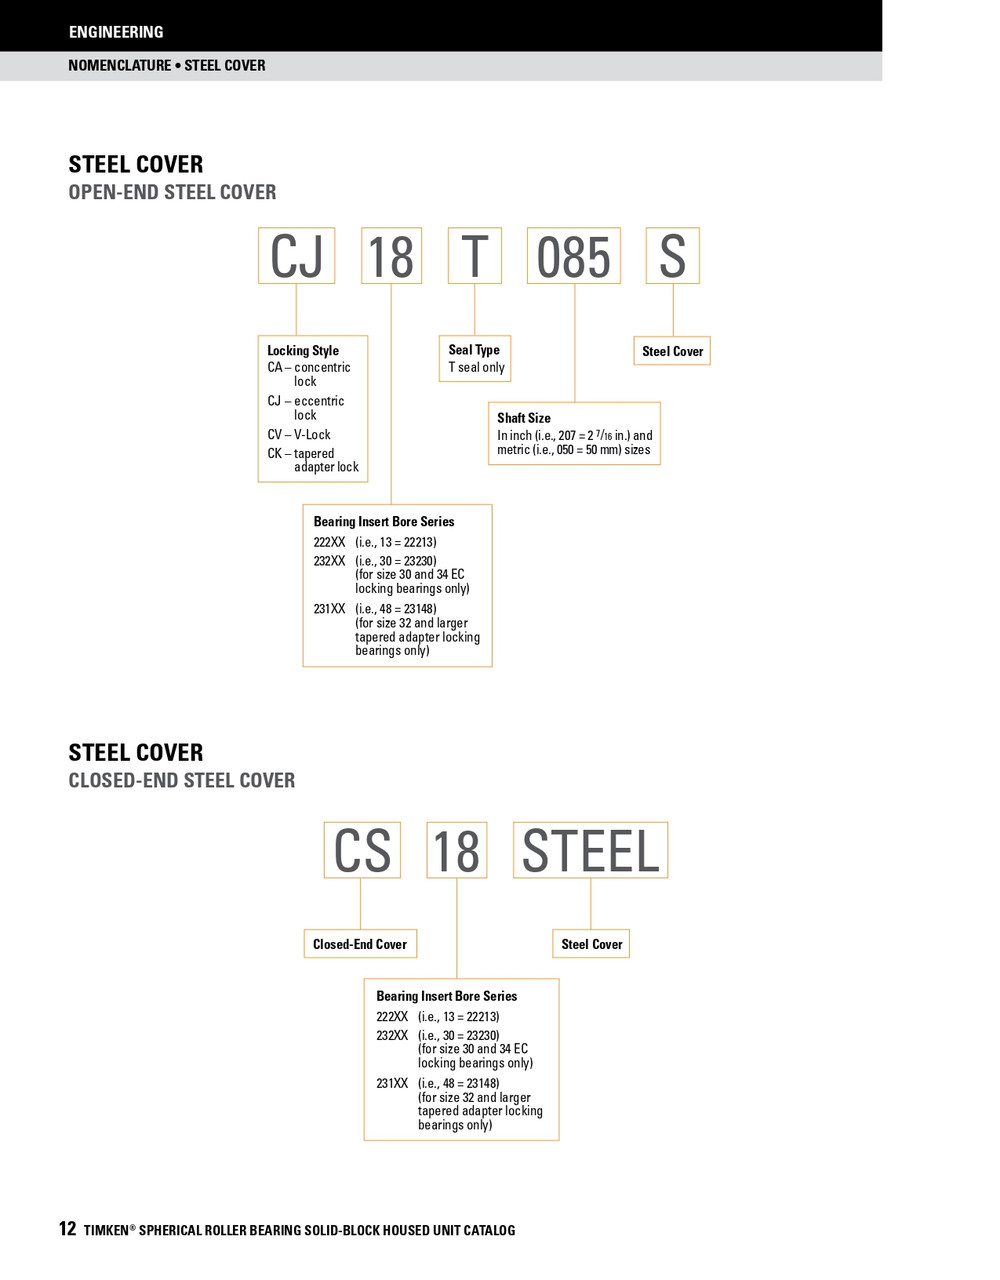 5-15/16" Timken SRB Steel Open End Cover w/Teflon Seal - TA/DV Taper Lock Bushing Type  CK34O515S